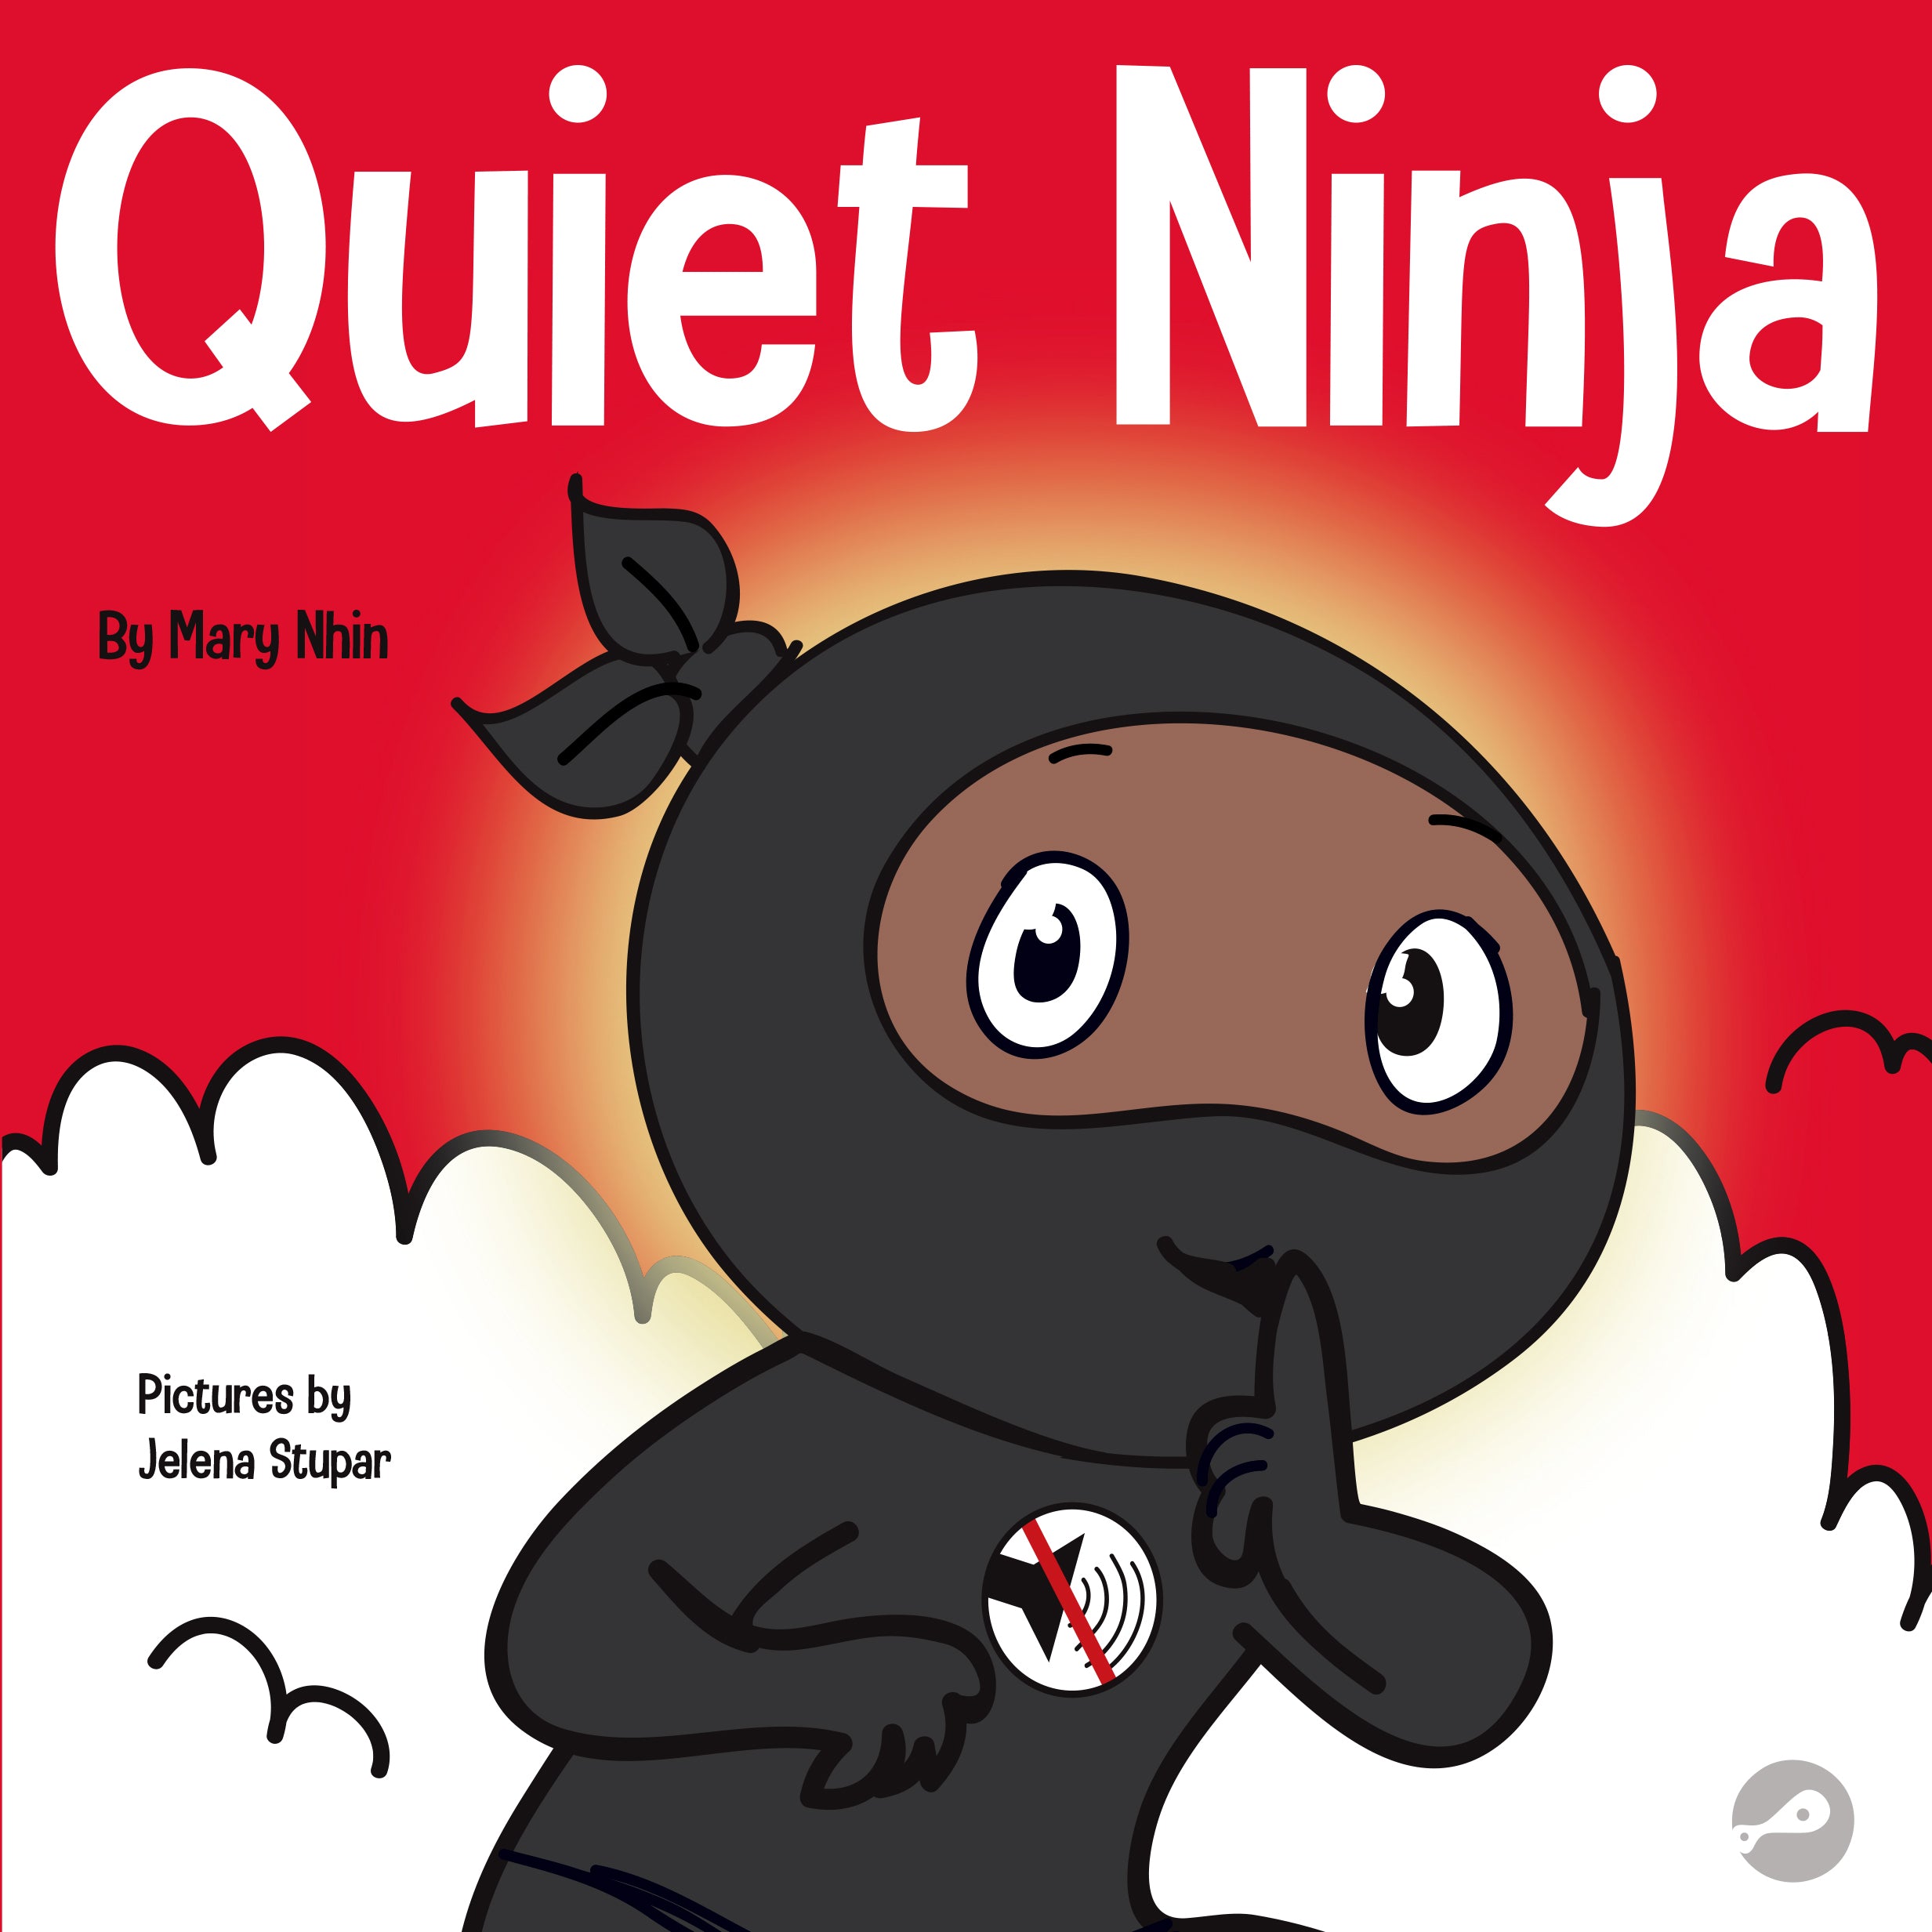 Quiet Ninja- KDP Full Cover.indd